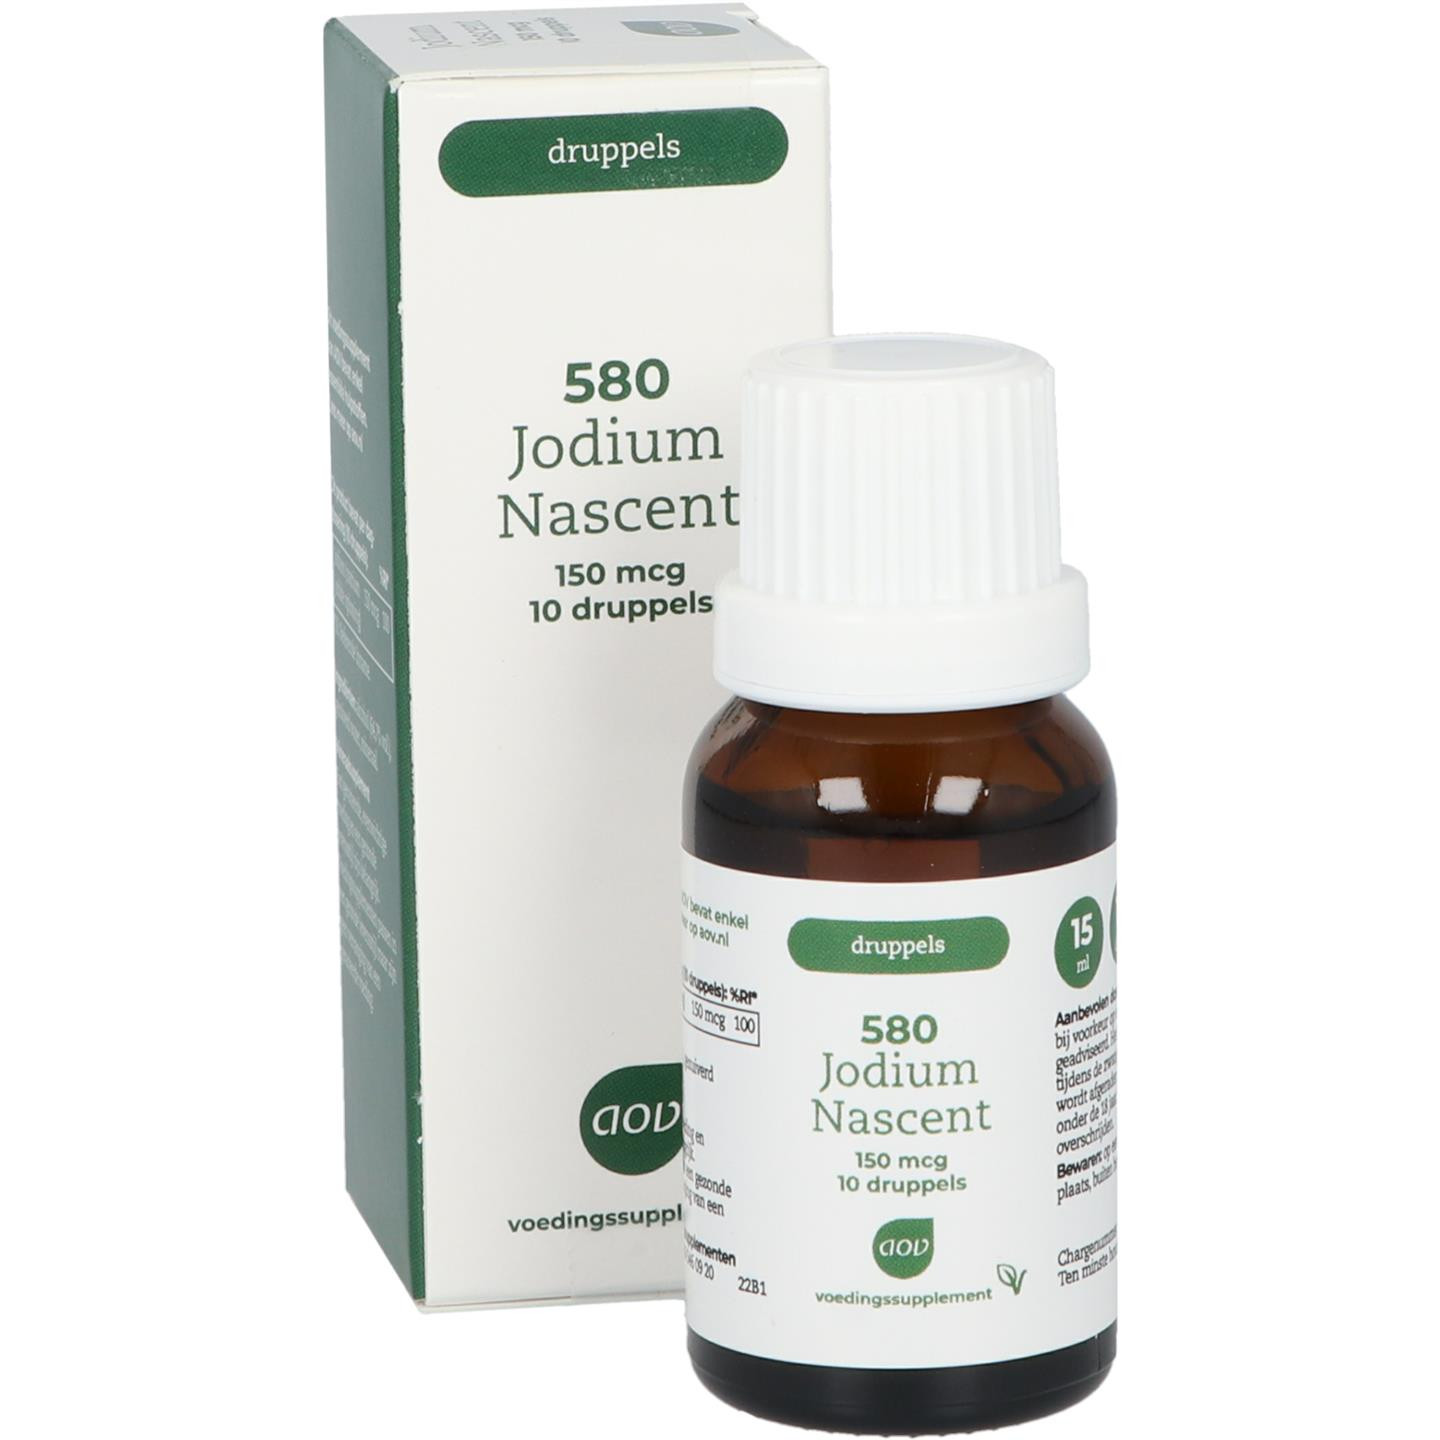 580 Jodium Nascent